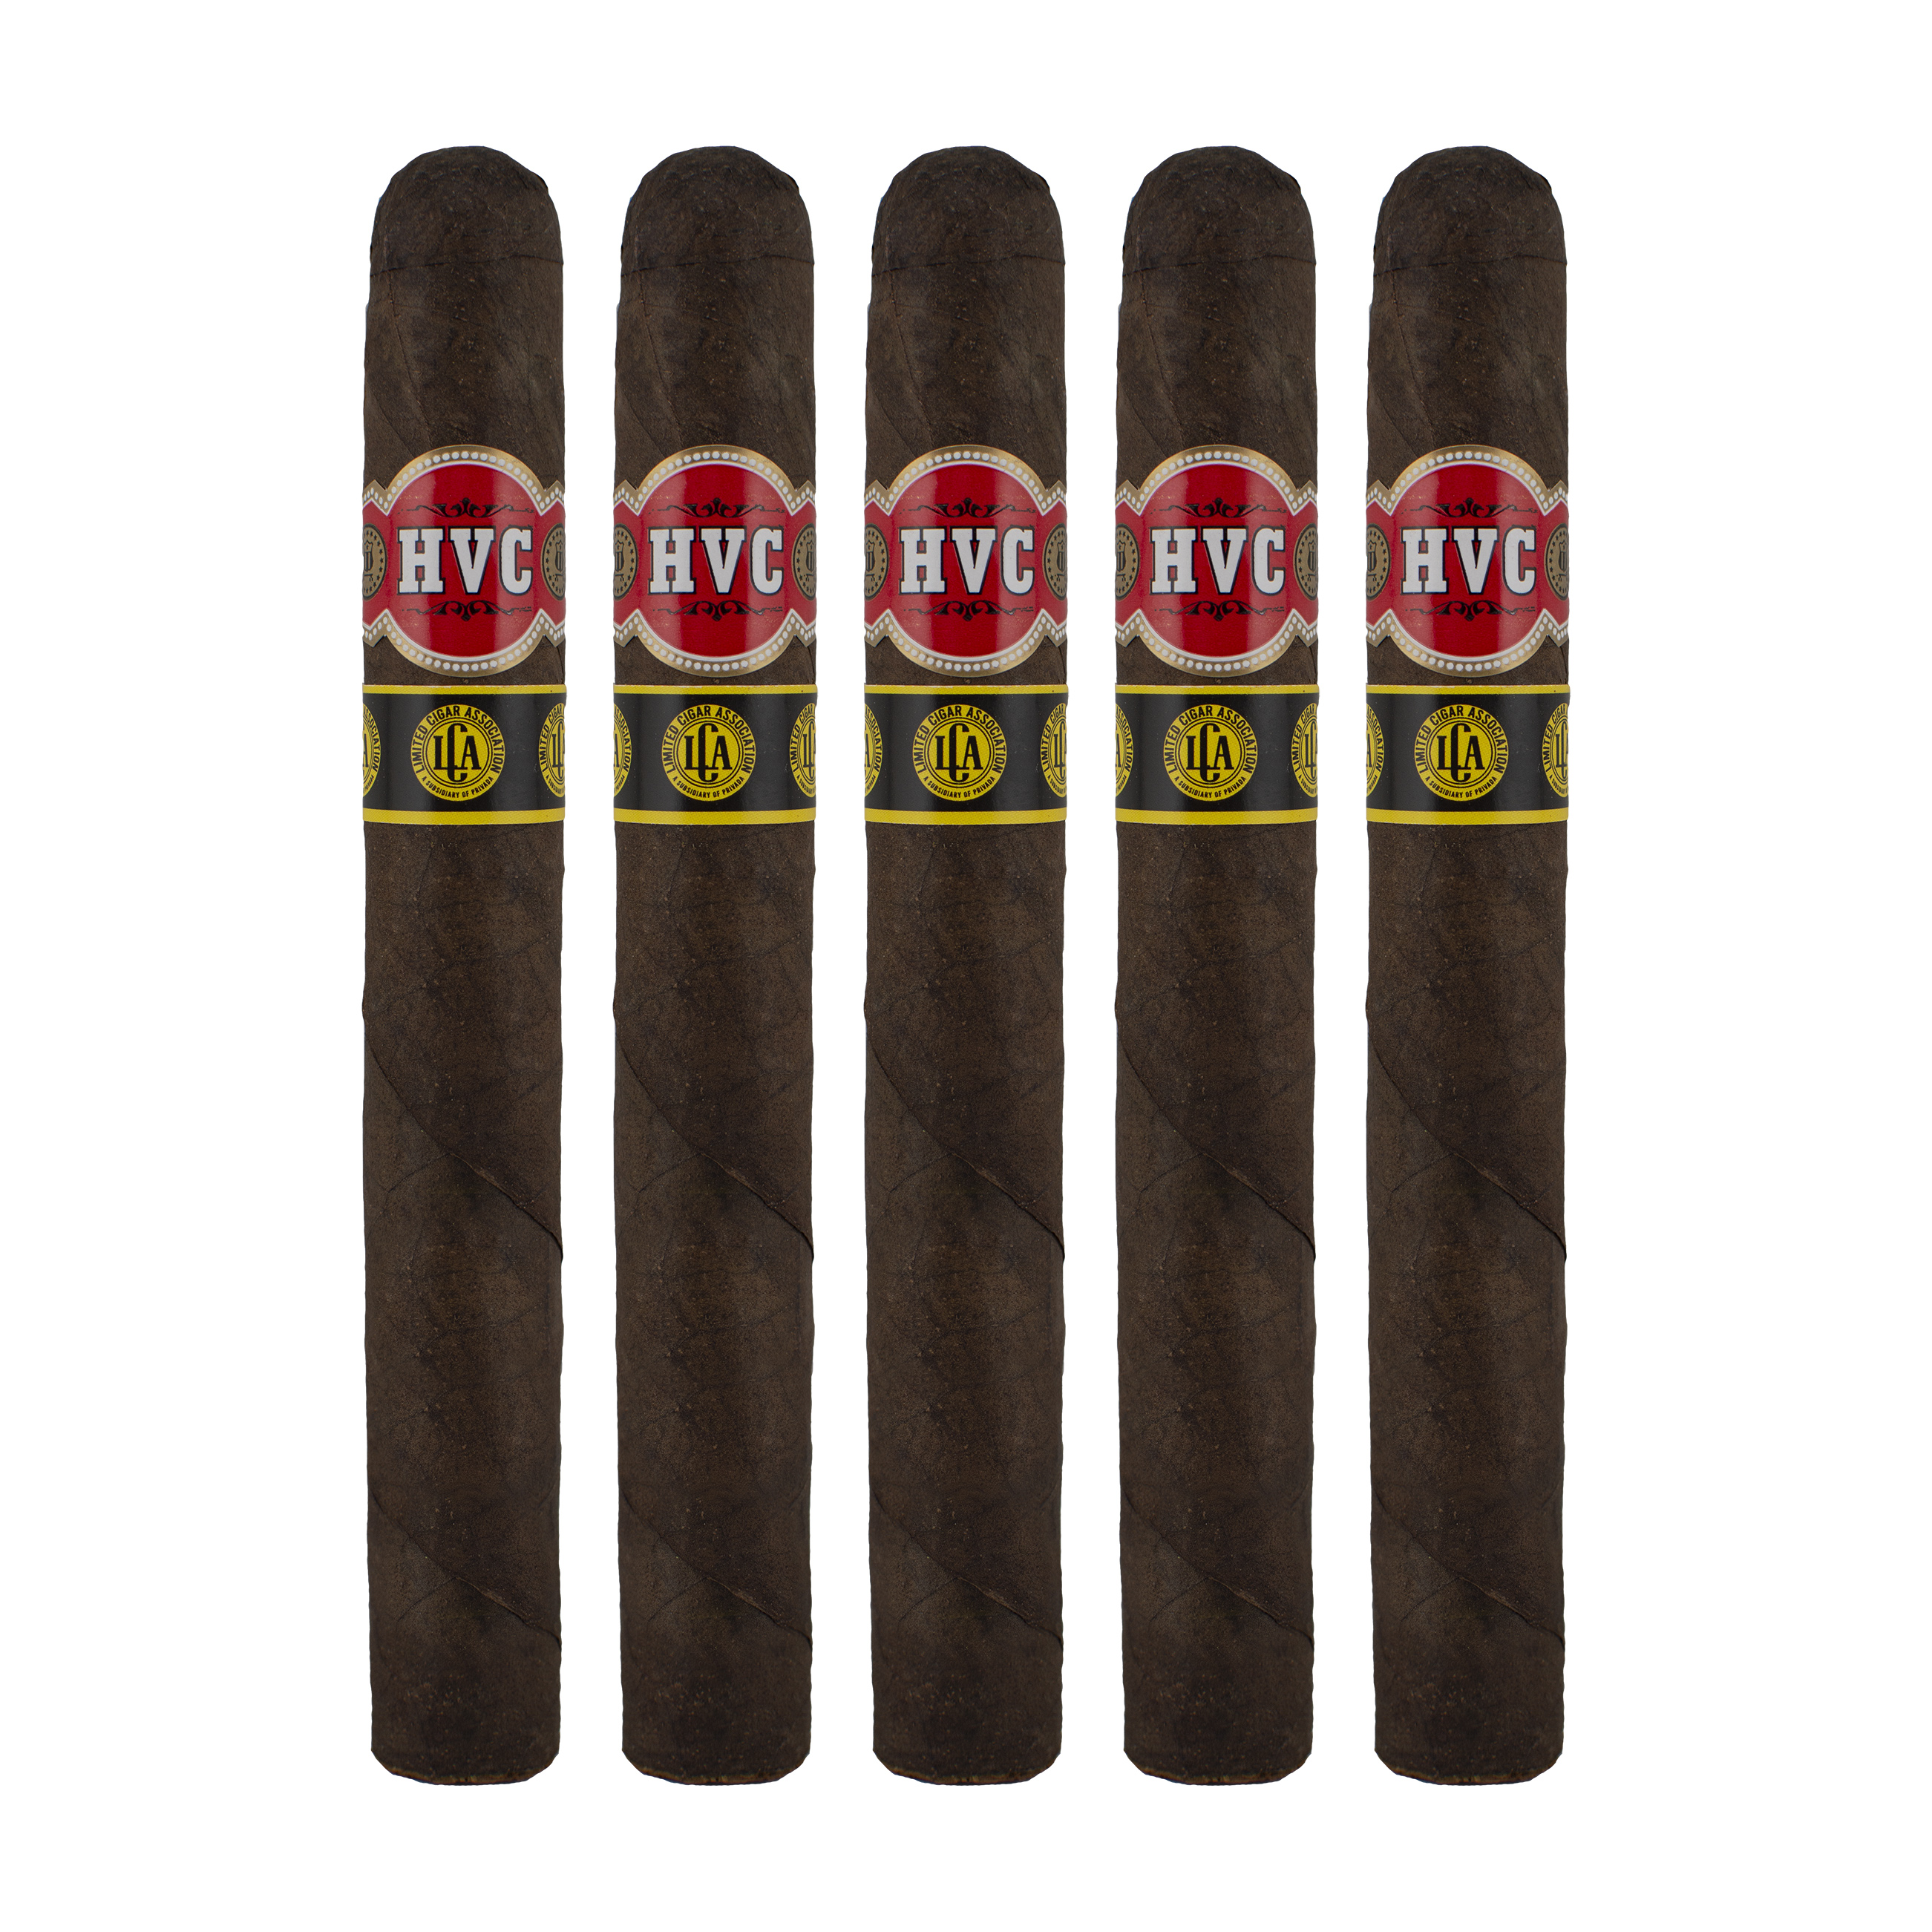 The Reinier Lorenzo LCA Masterpiece Cigar - 5 Pack